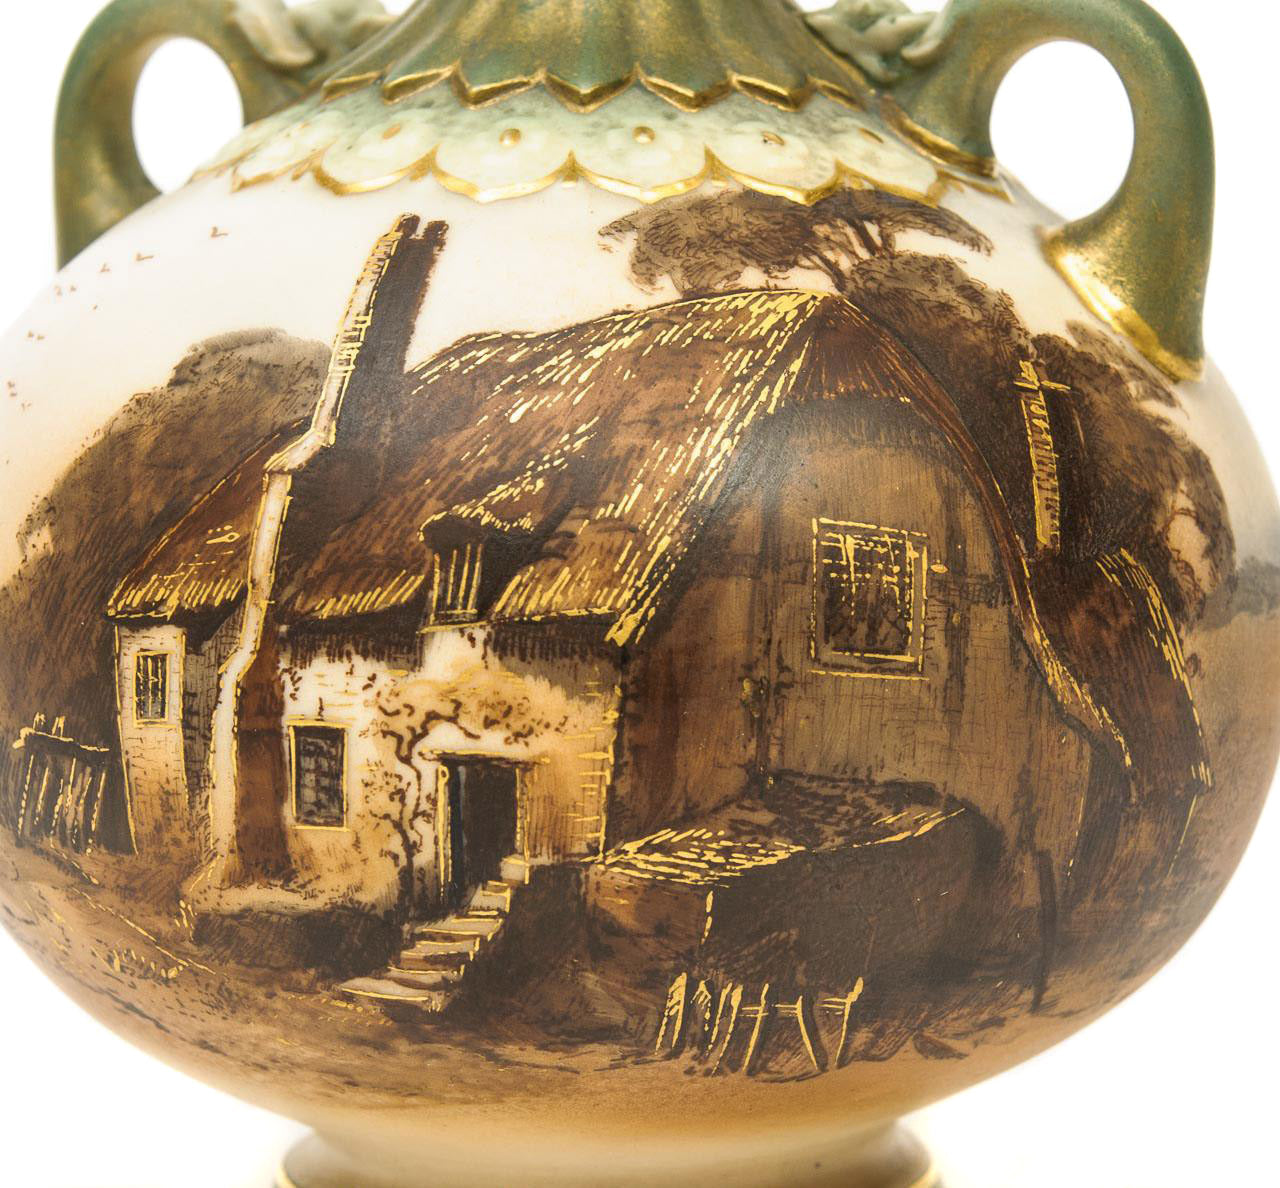 A Royal Worcester Hand Painted Rural Thatched Cottage Vase - Edwardian c.1908  (code8035)